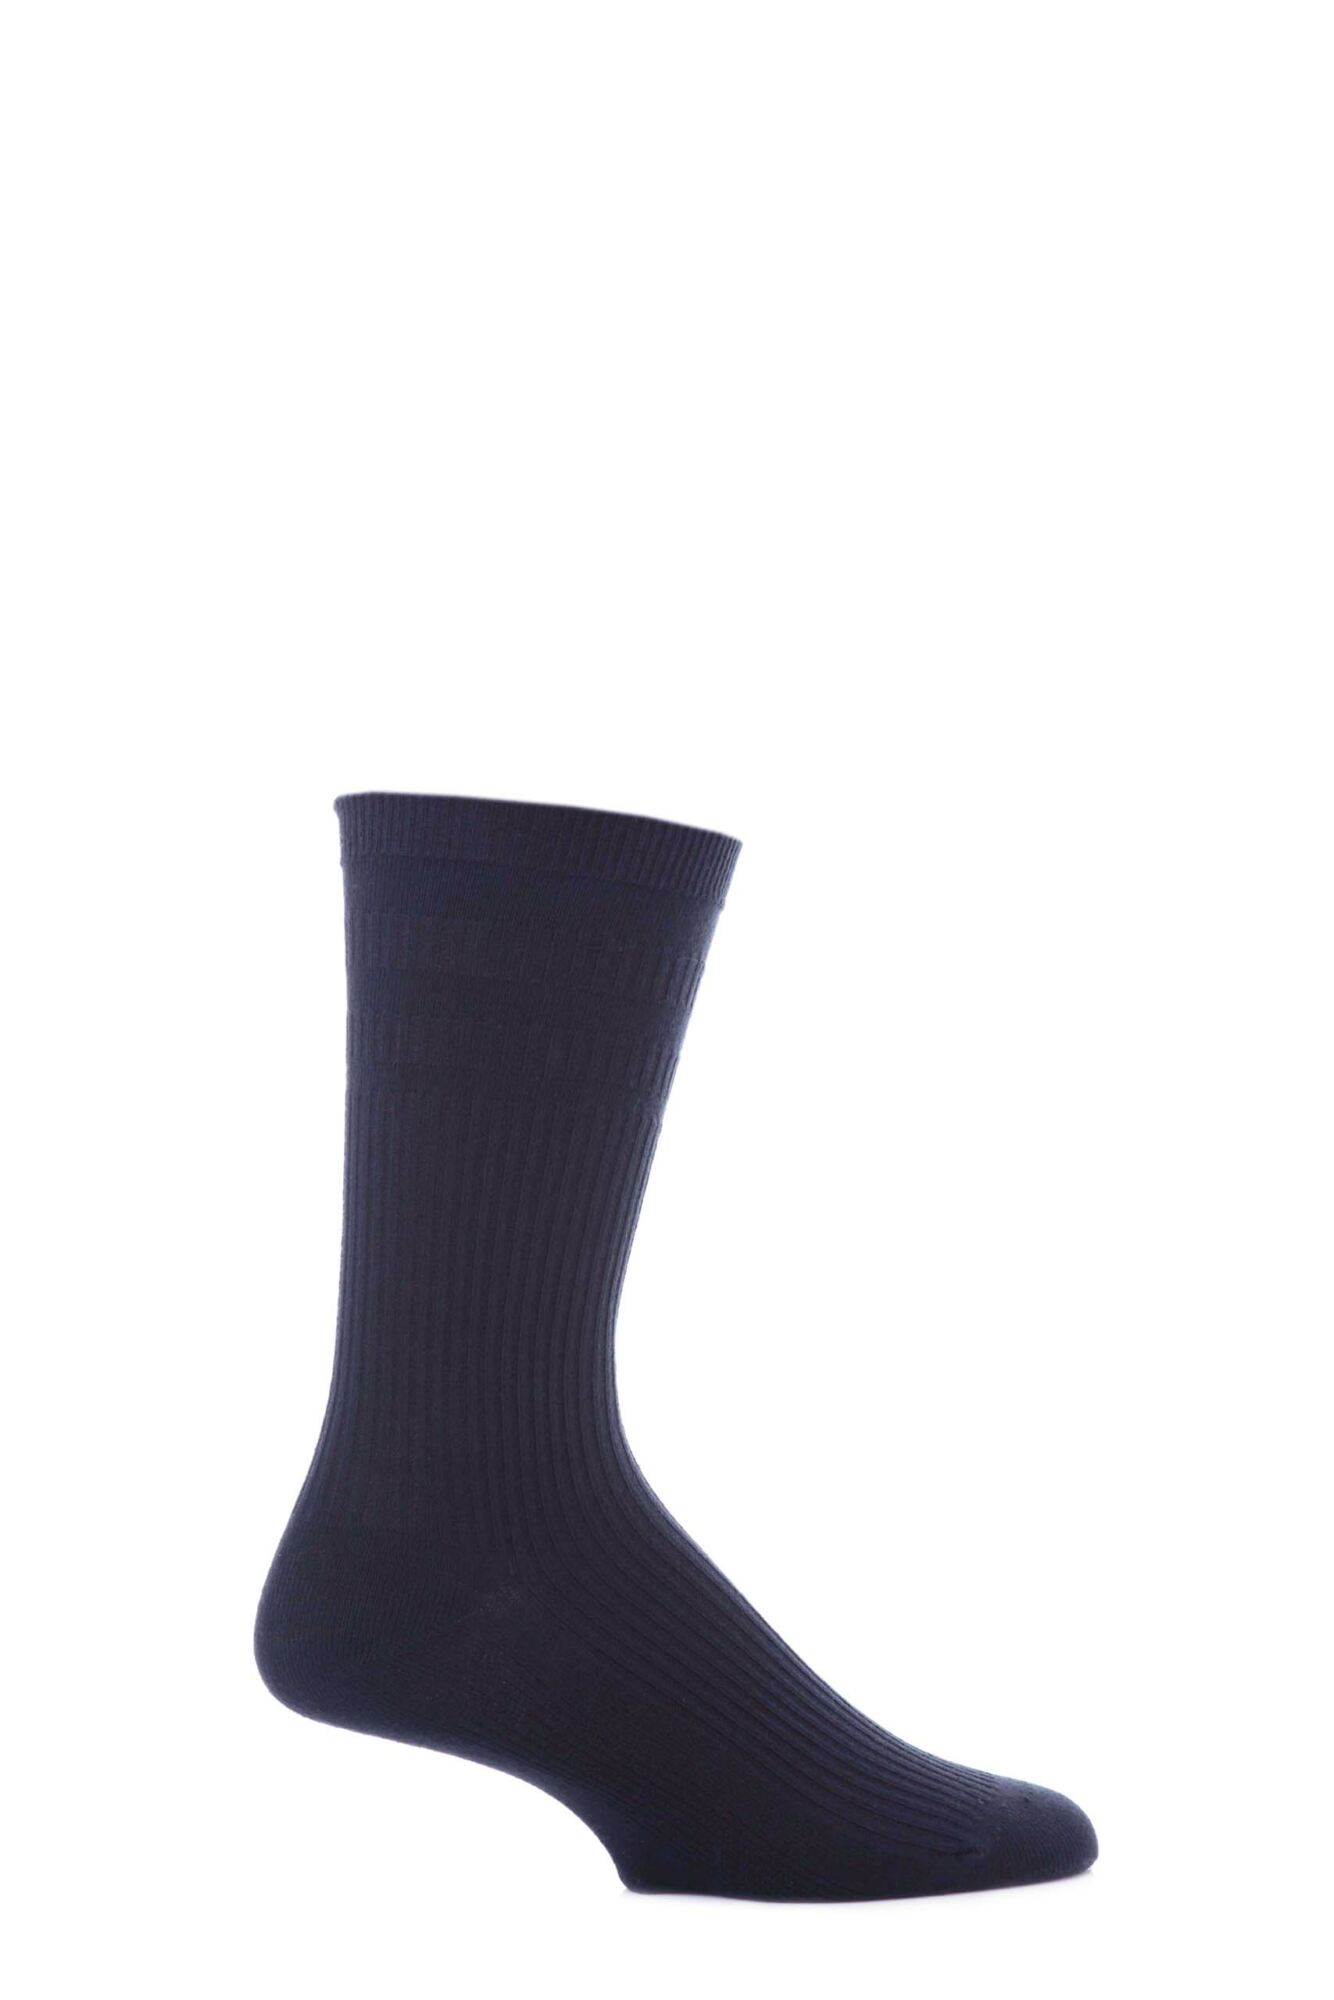 Mens HJ Hall Extra Wide Cotton Softop Socks | SOCKSHOP